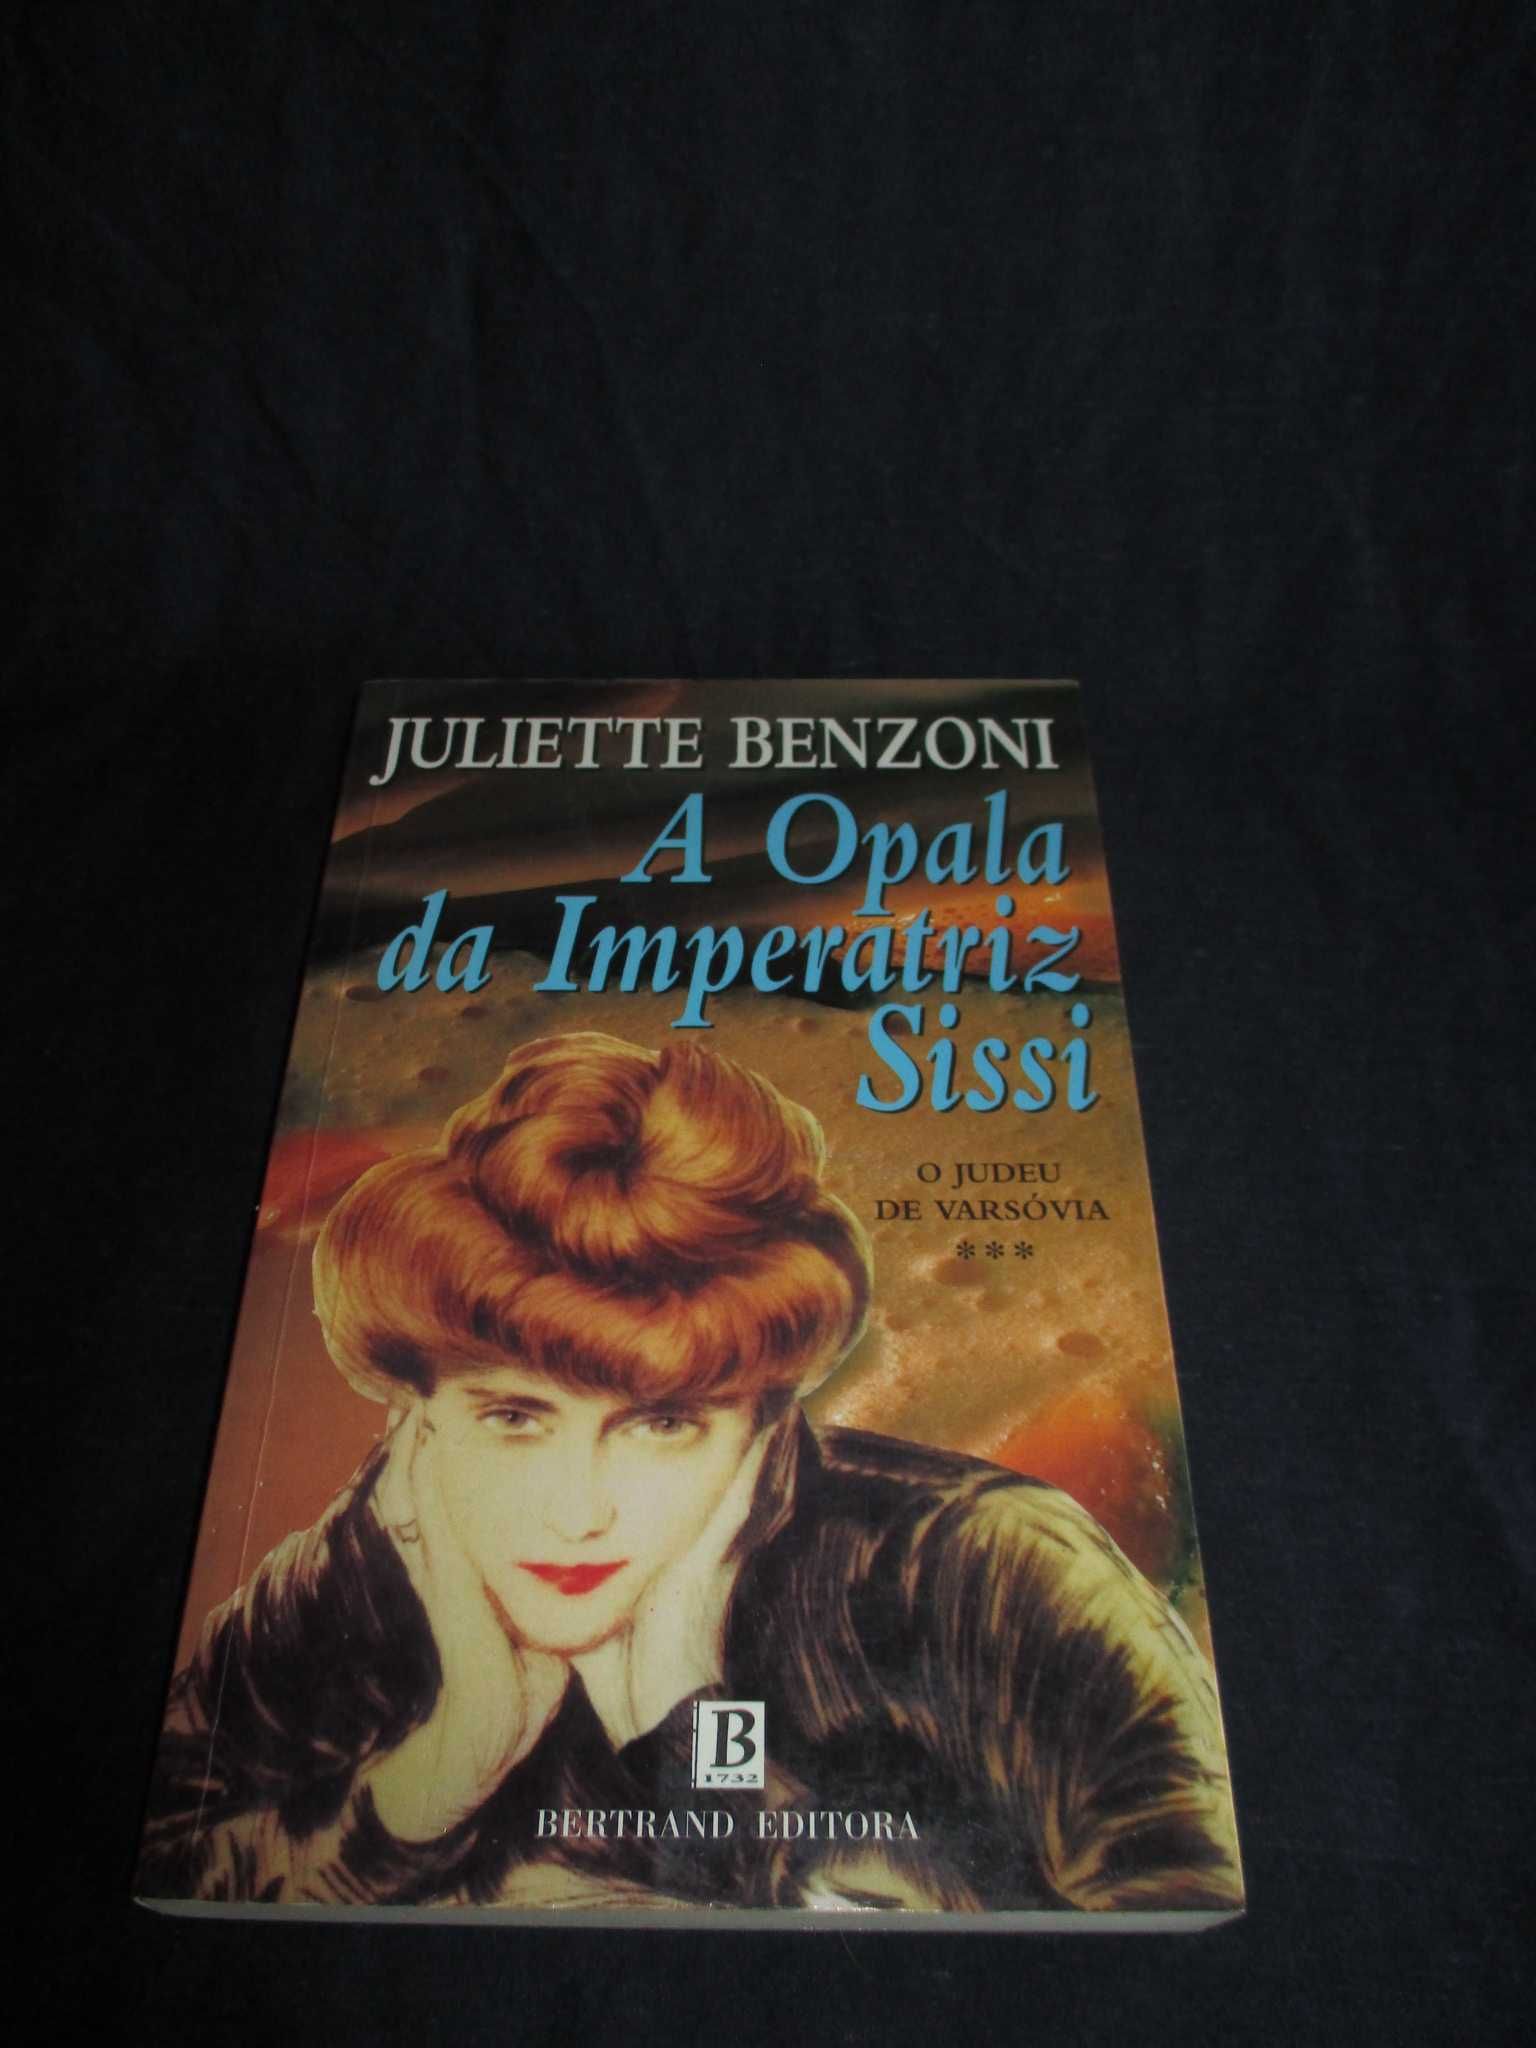 Livro A Opala da Imperatriz Sissi Juliette Benzoni O Judeu de Varsóvia